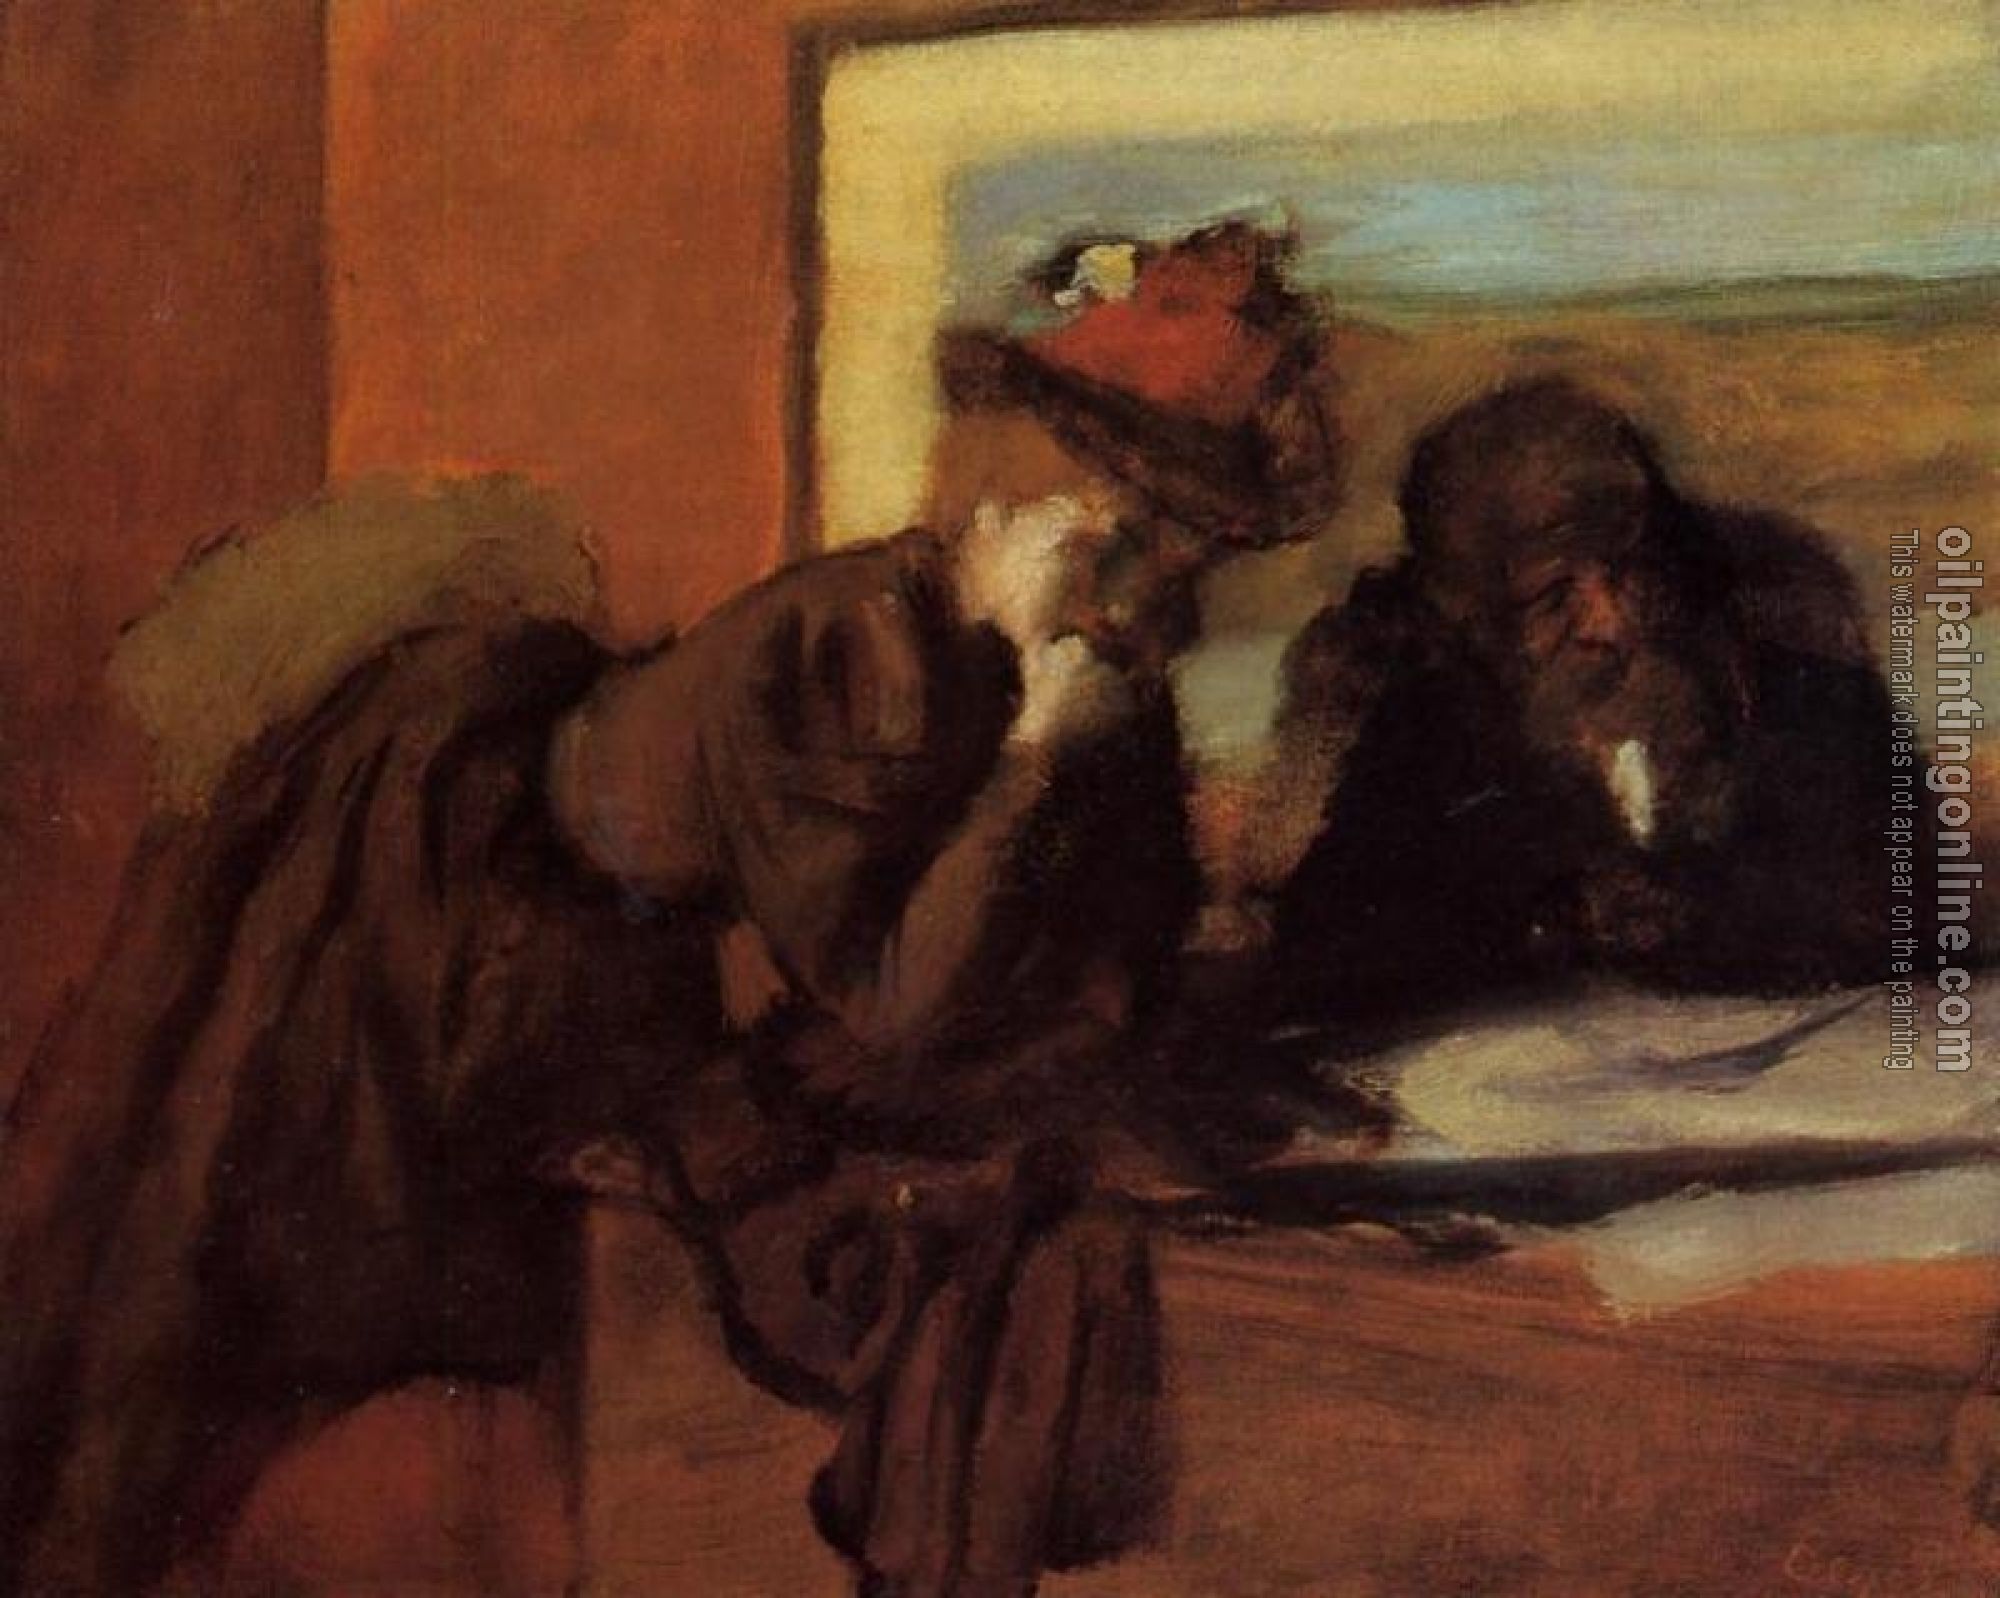 Degas, Edgar - Conversation